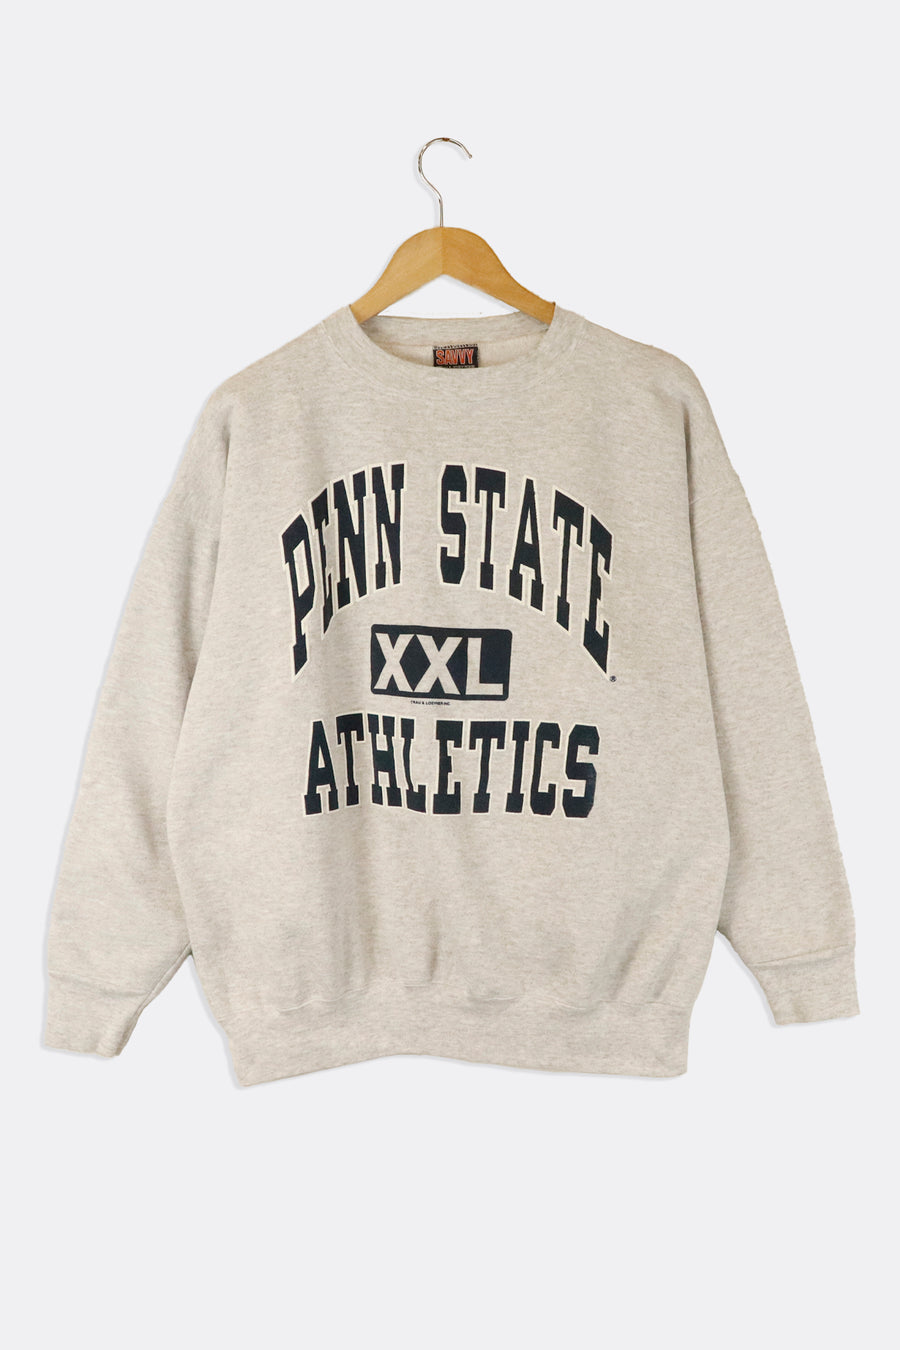 Vintage Penn State Athletics XXL Puffy Vinyl Large Navy Font With White Outlining Sweatshirt Sz L